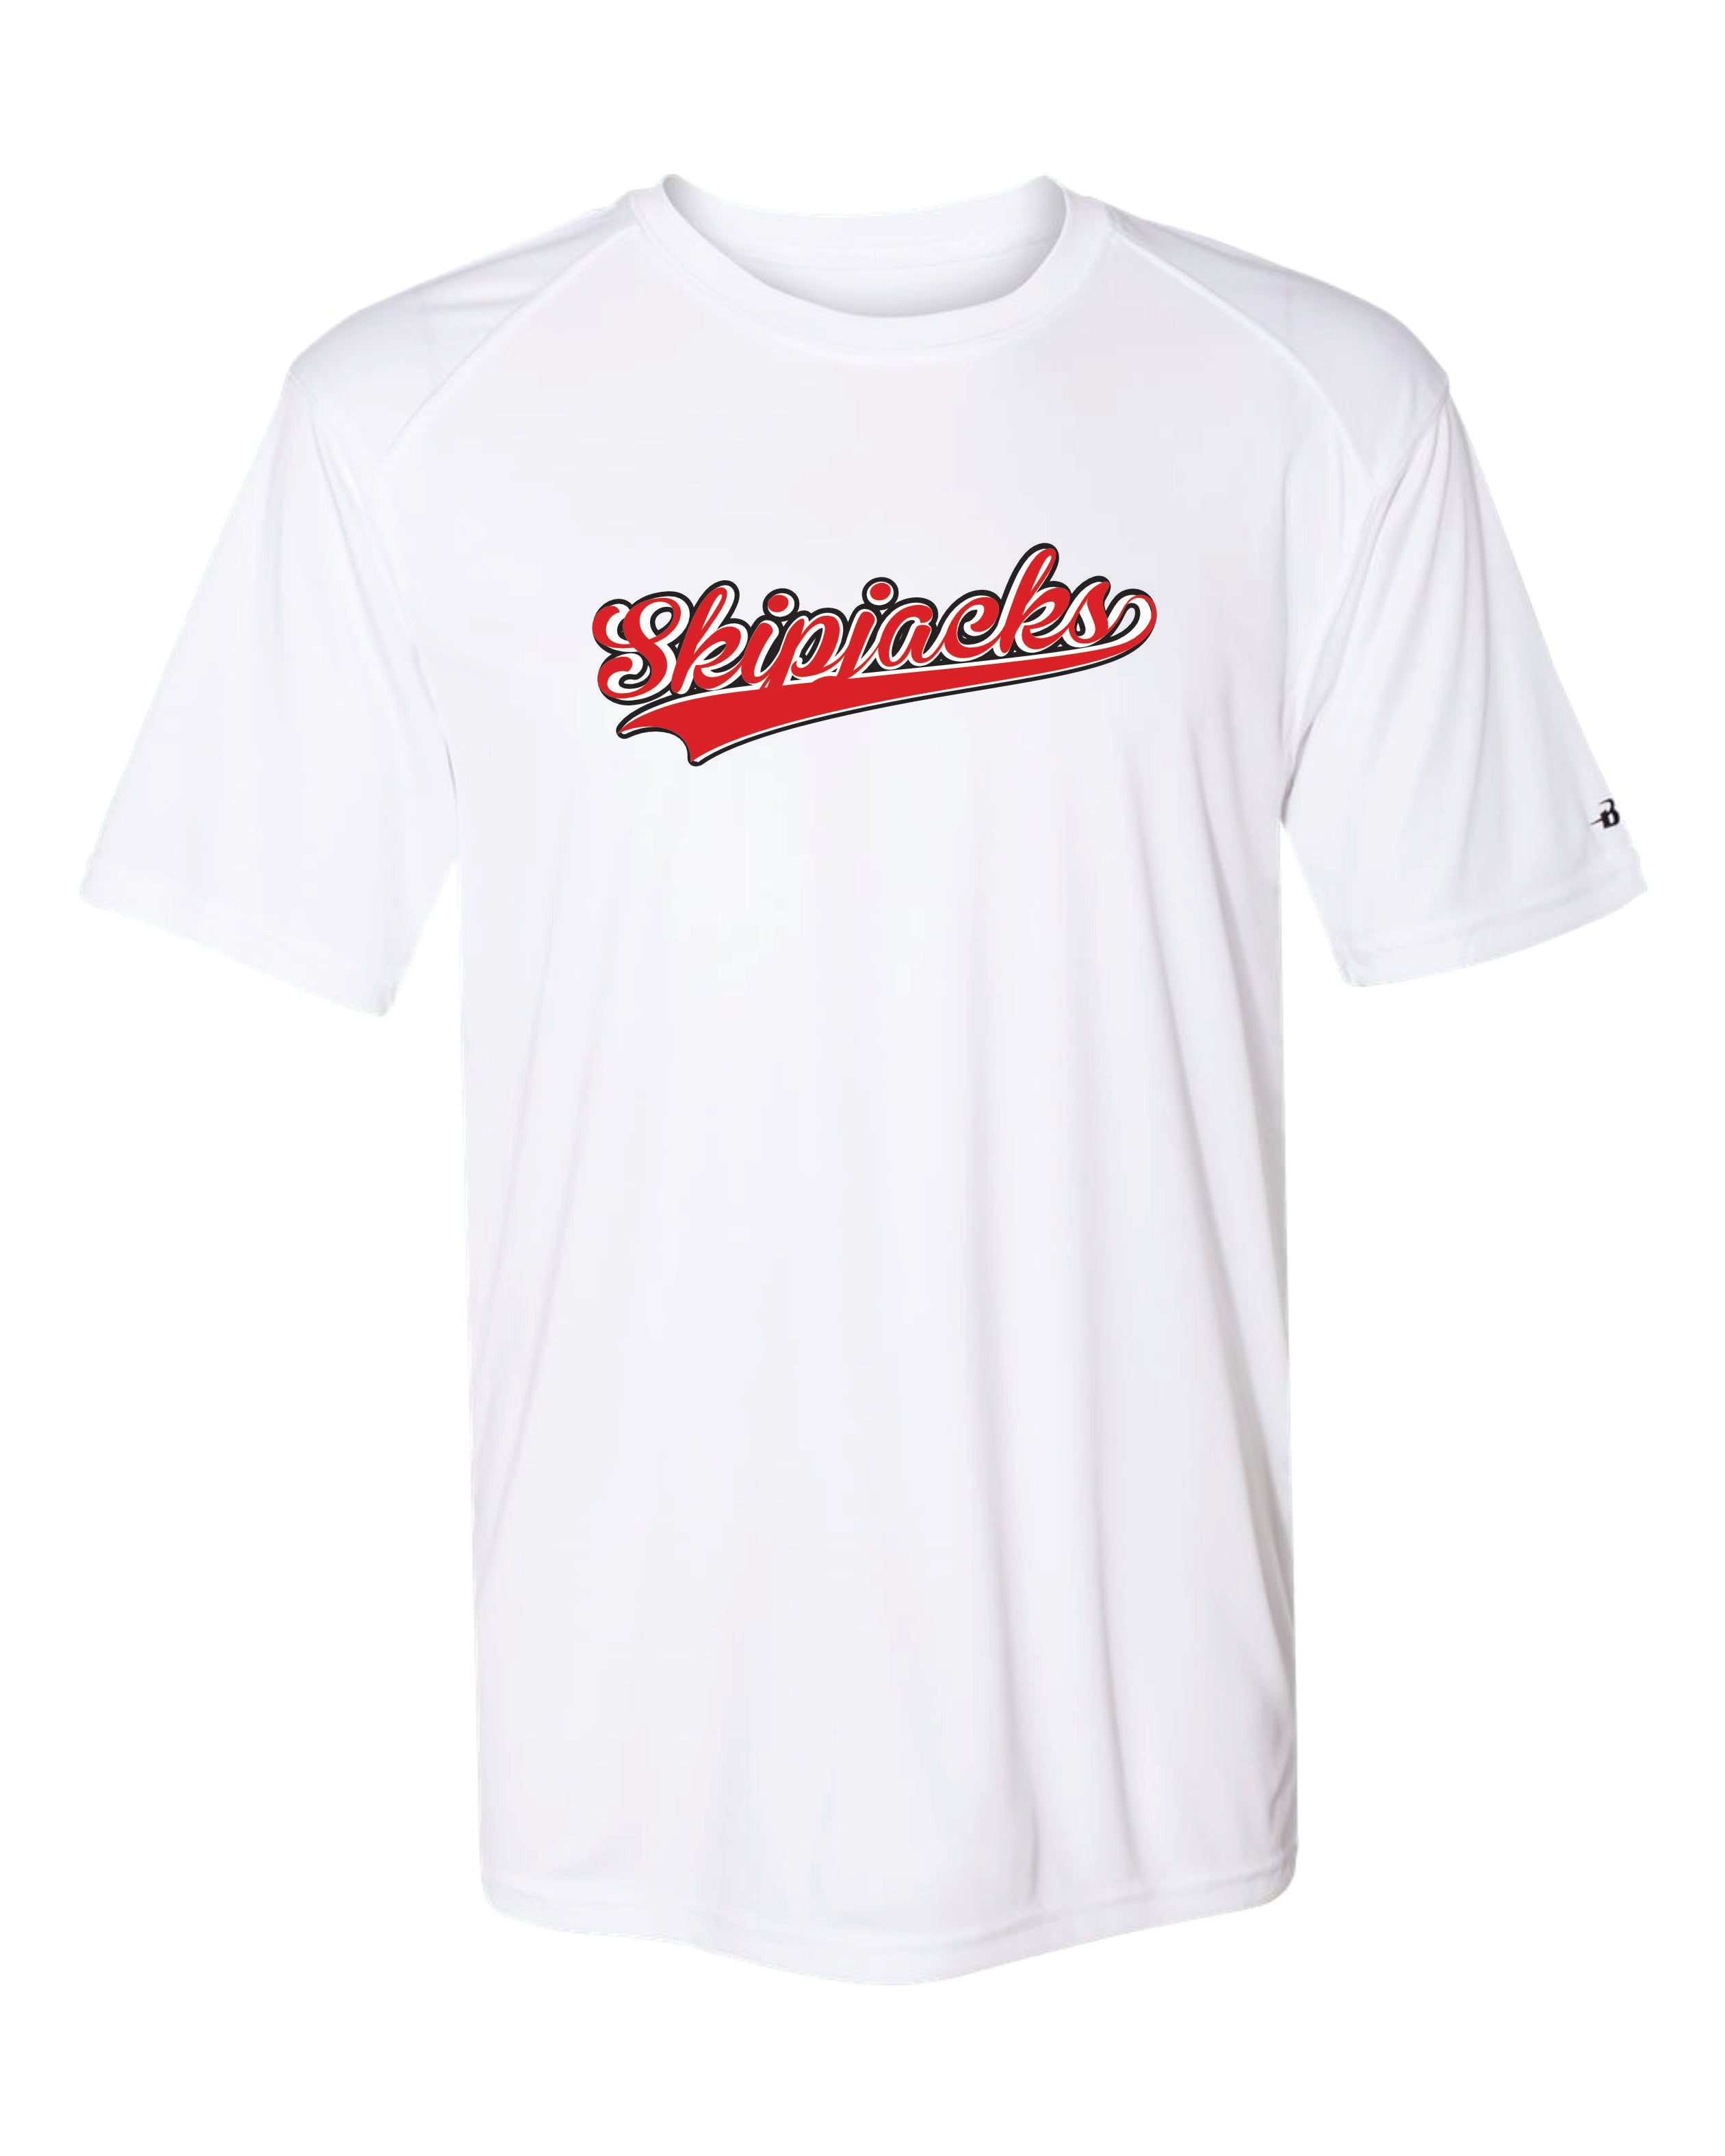 Skipjacks Baseball Short Sleeve Badger Dri Fit T shirt-YOUTH